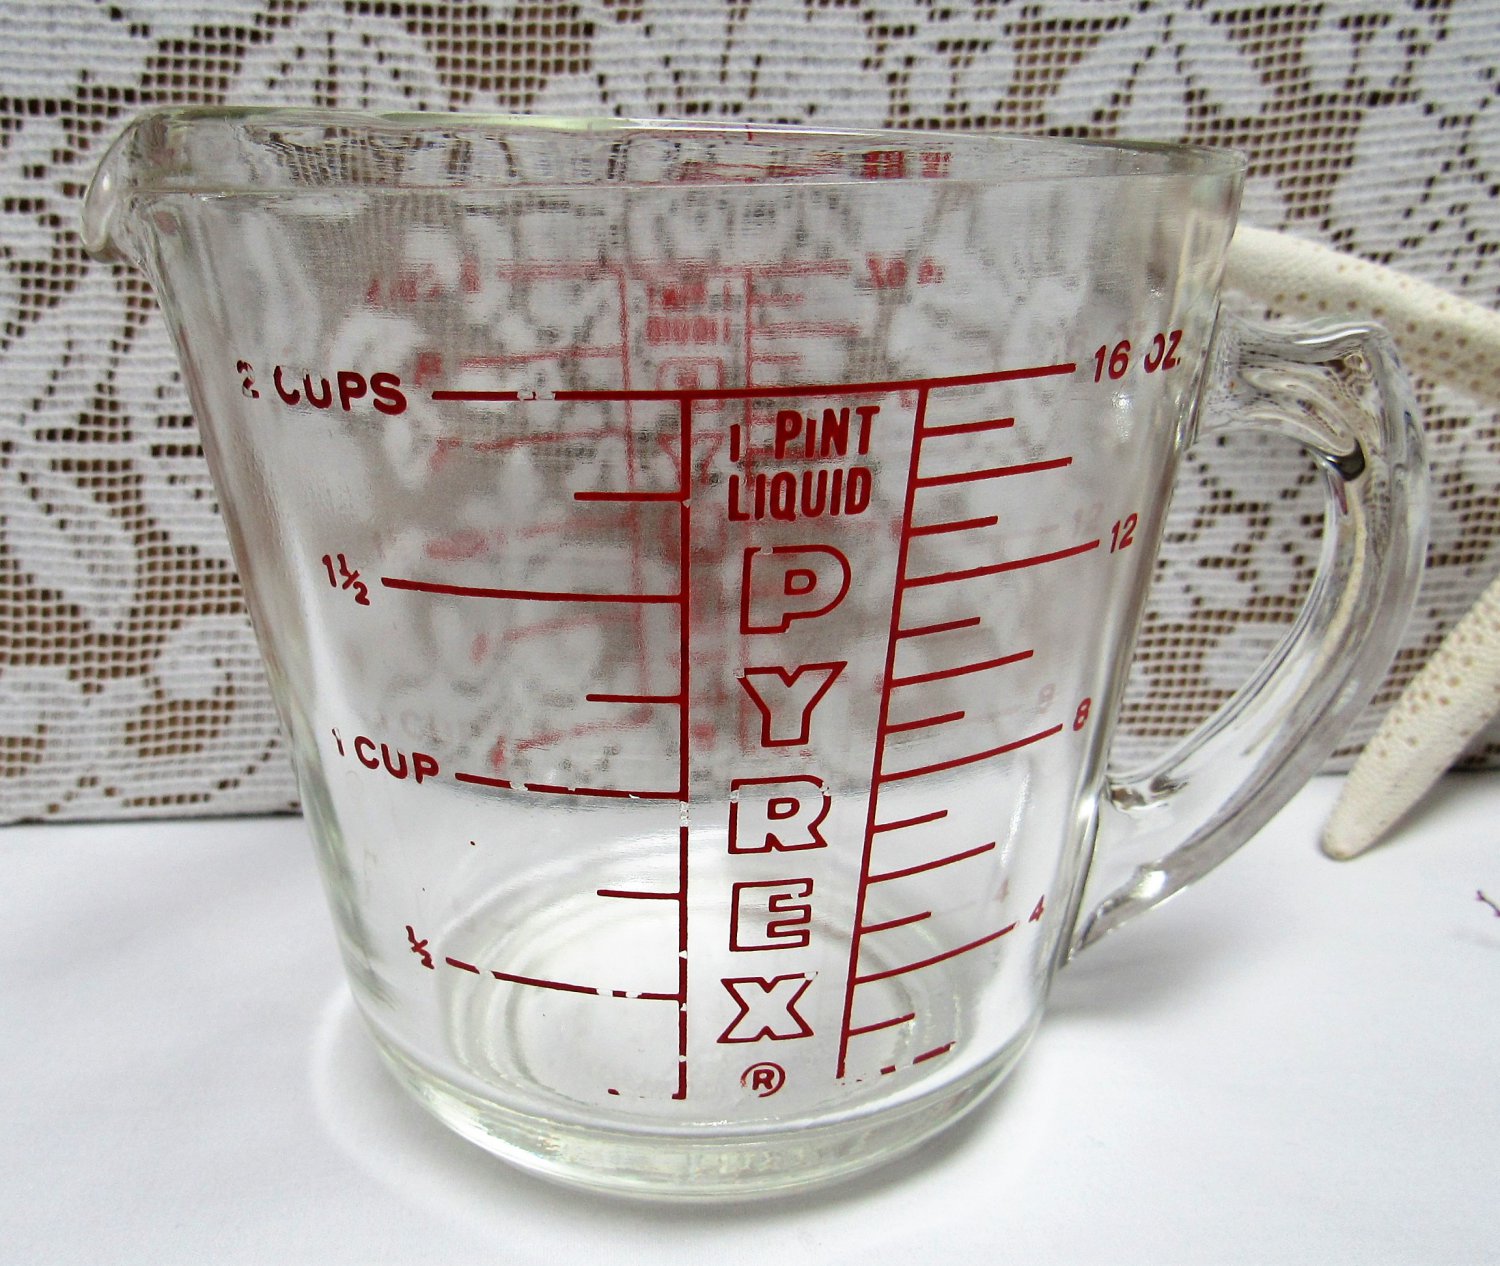 Vintage PYREX - Borosilicate Glass Cookware - Measuring Cup 0.5 L